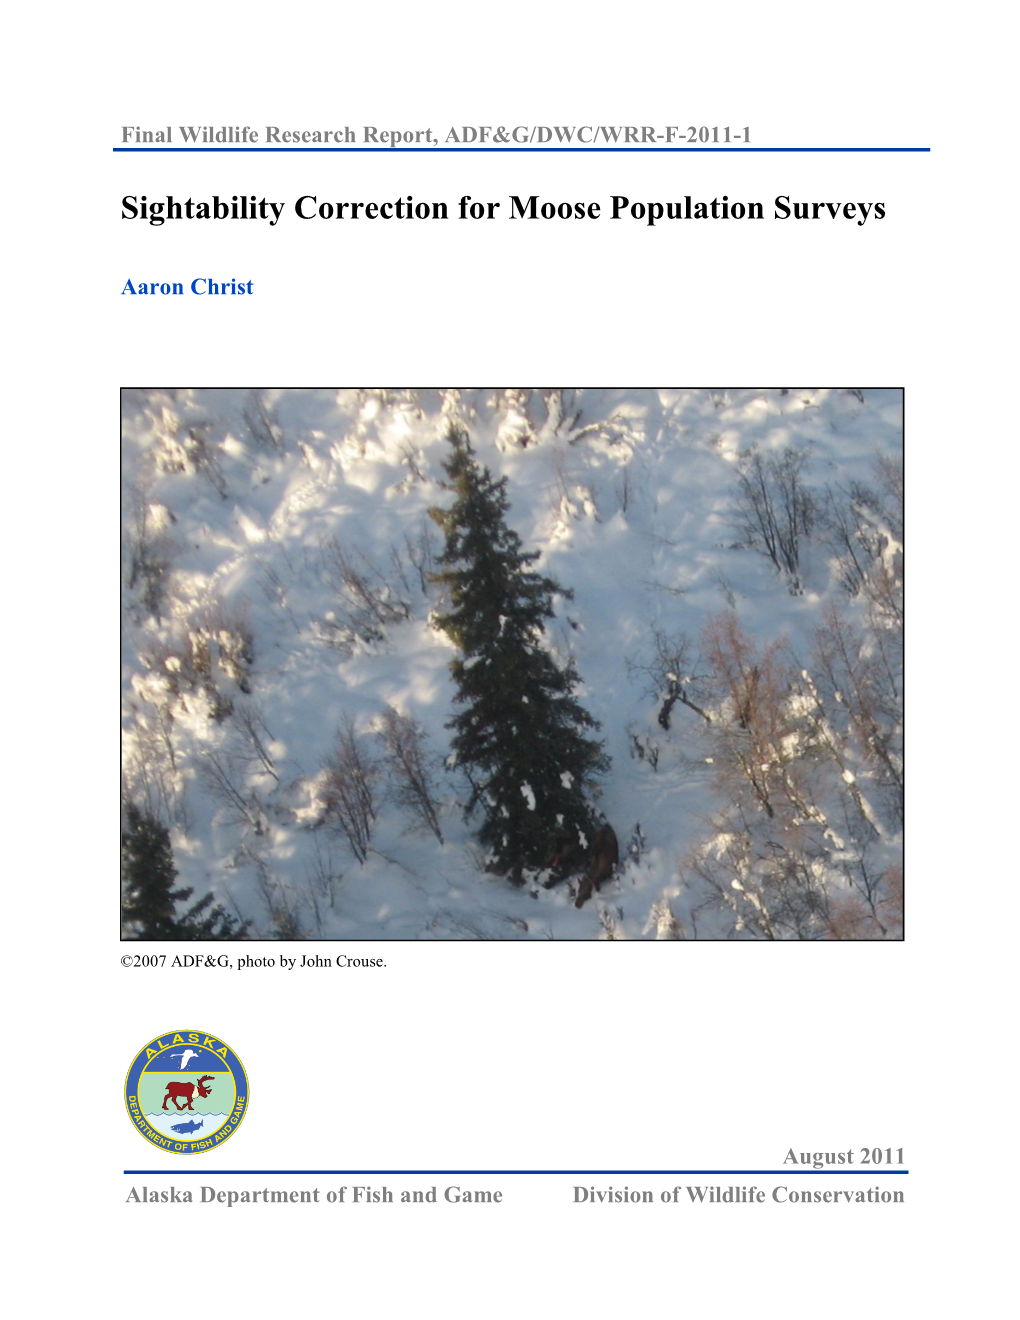 Sightability Correction for Moose Population Surveys, Final Wildlife